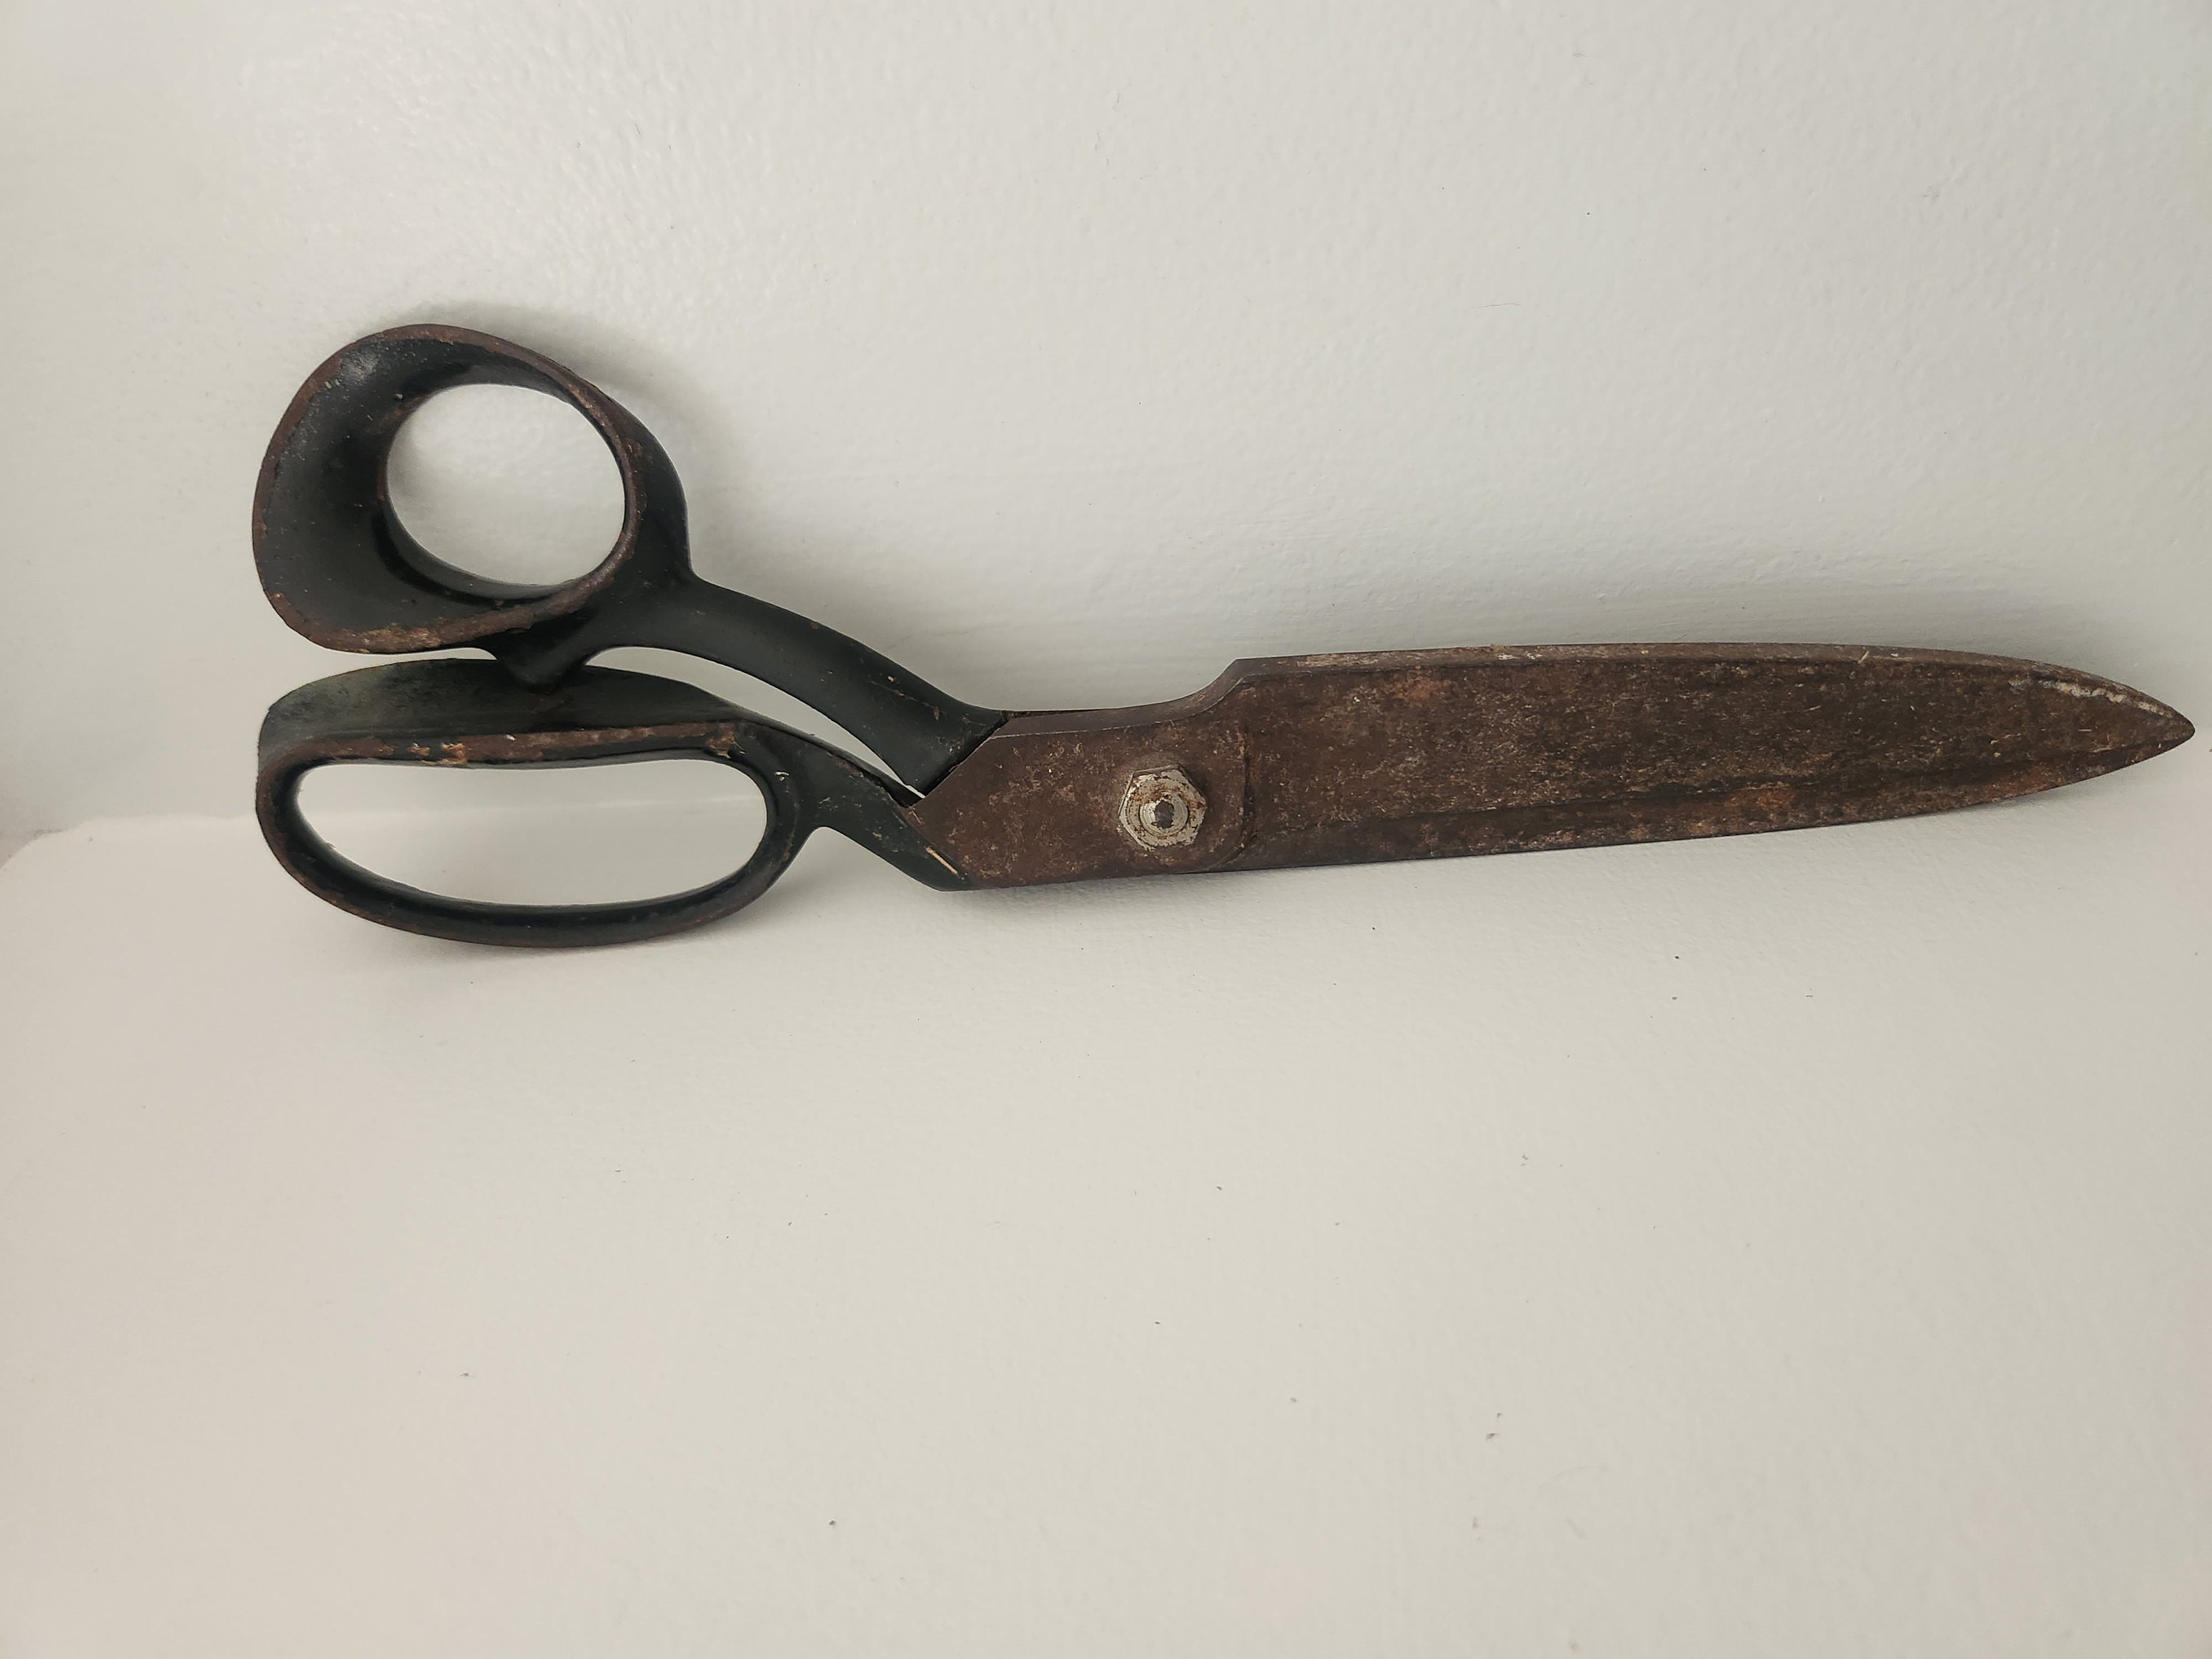 R. Heinisch Shears - 13” Metal Scissors - 1 LB. - Large - Newark